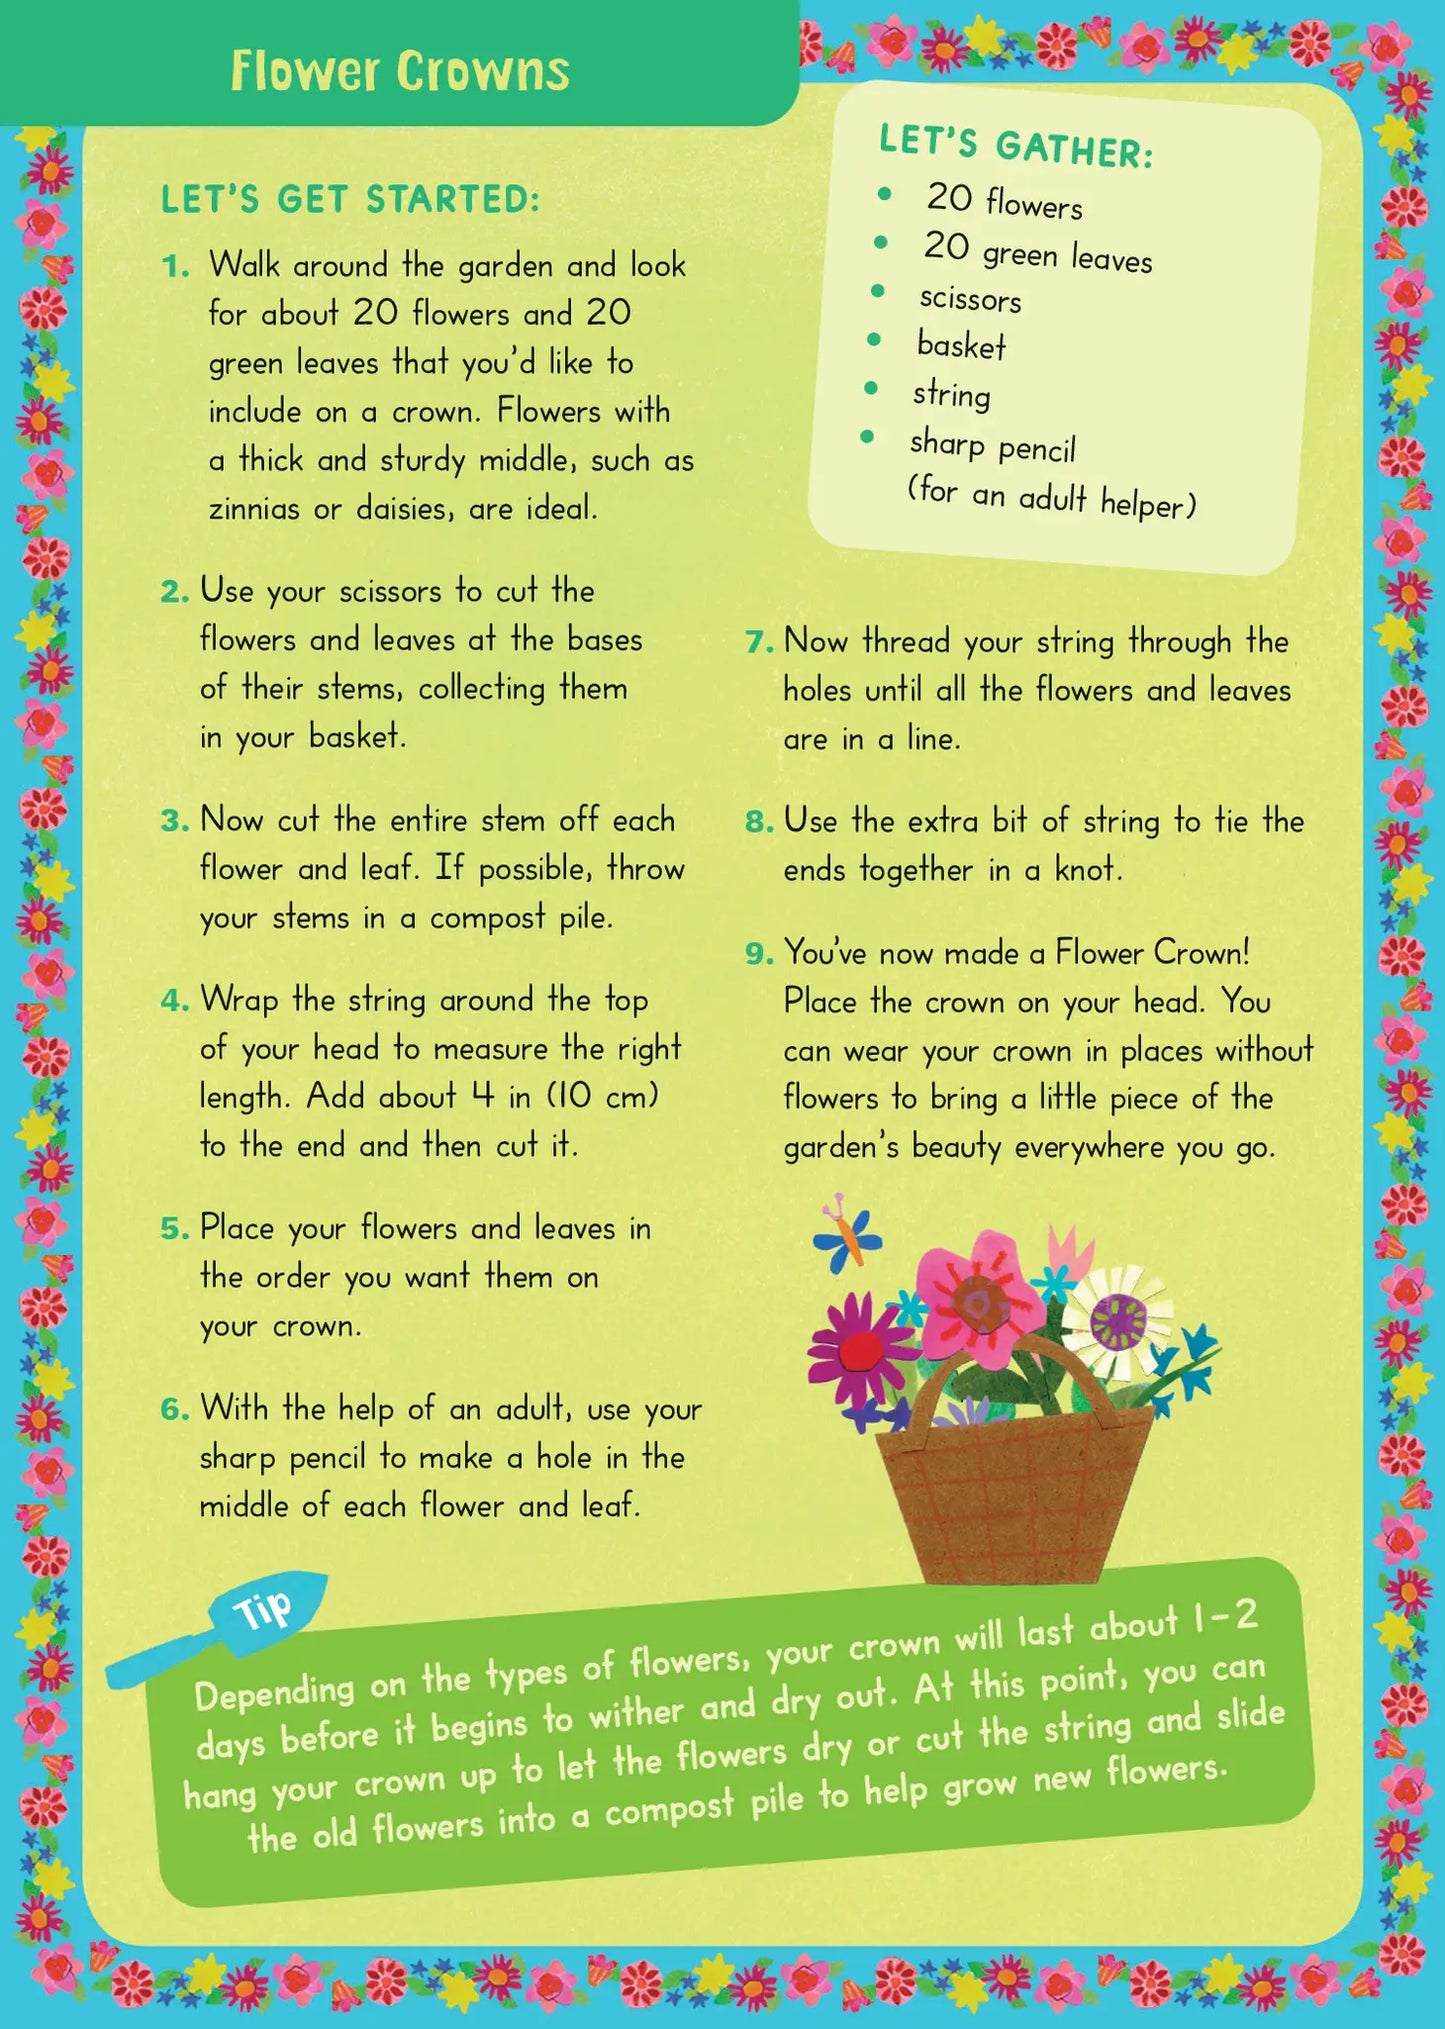 Kids' Garden Activity Cards